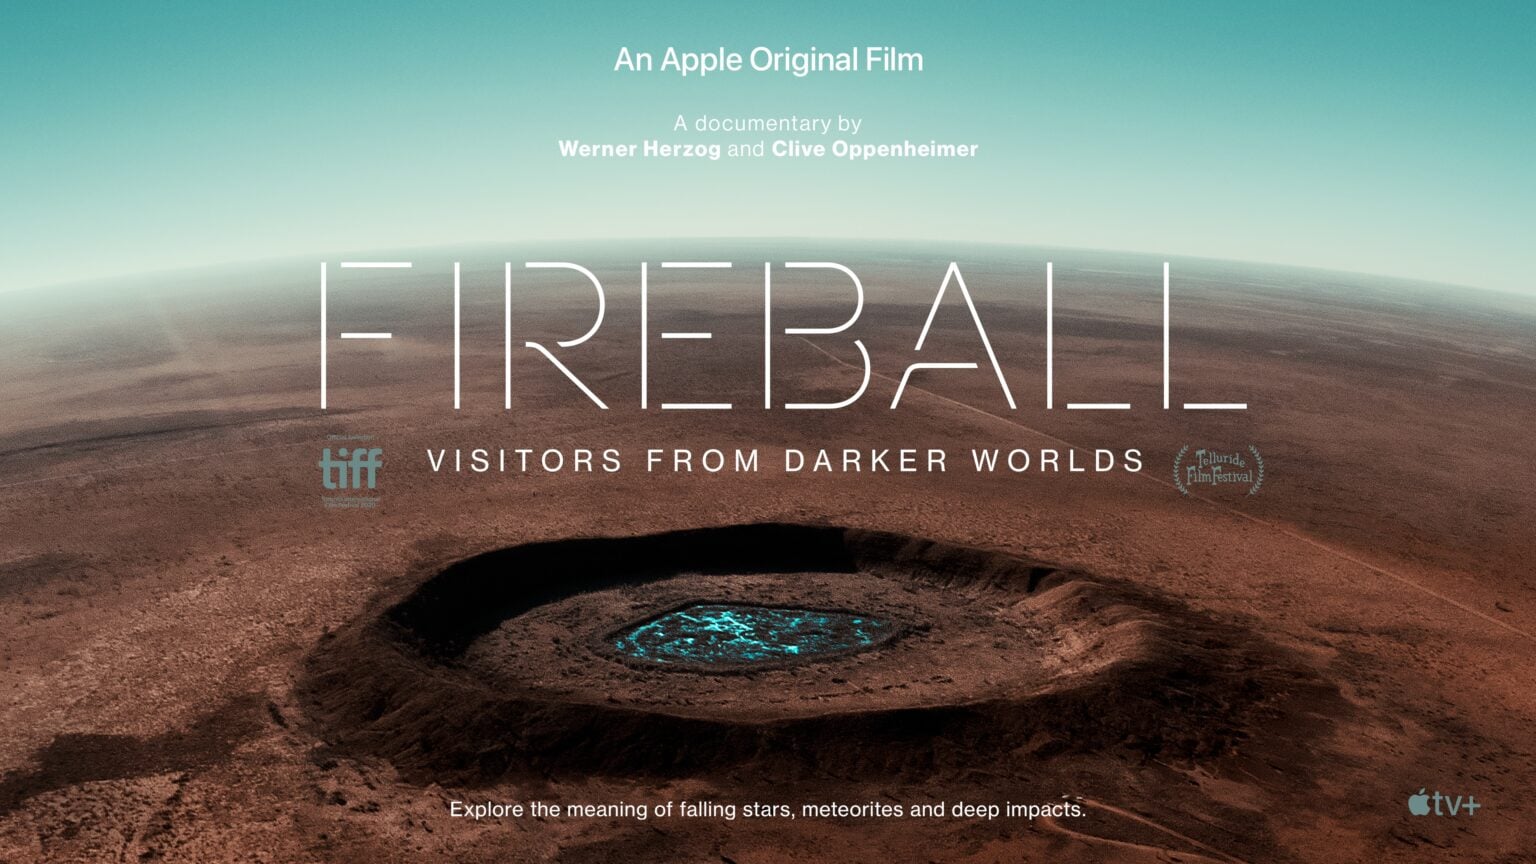 Fireball: Visitors From Darker Worlds debuts on Apple TV+ in November.